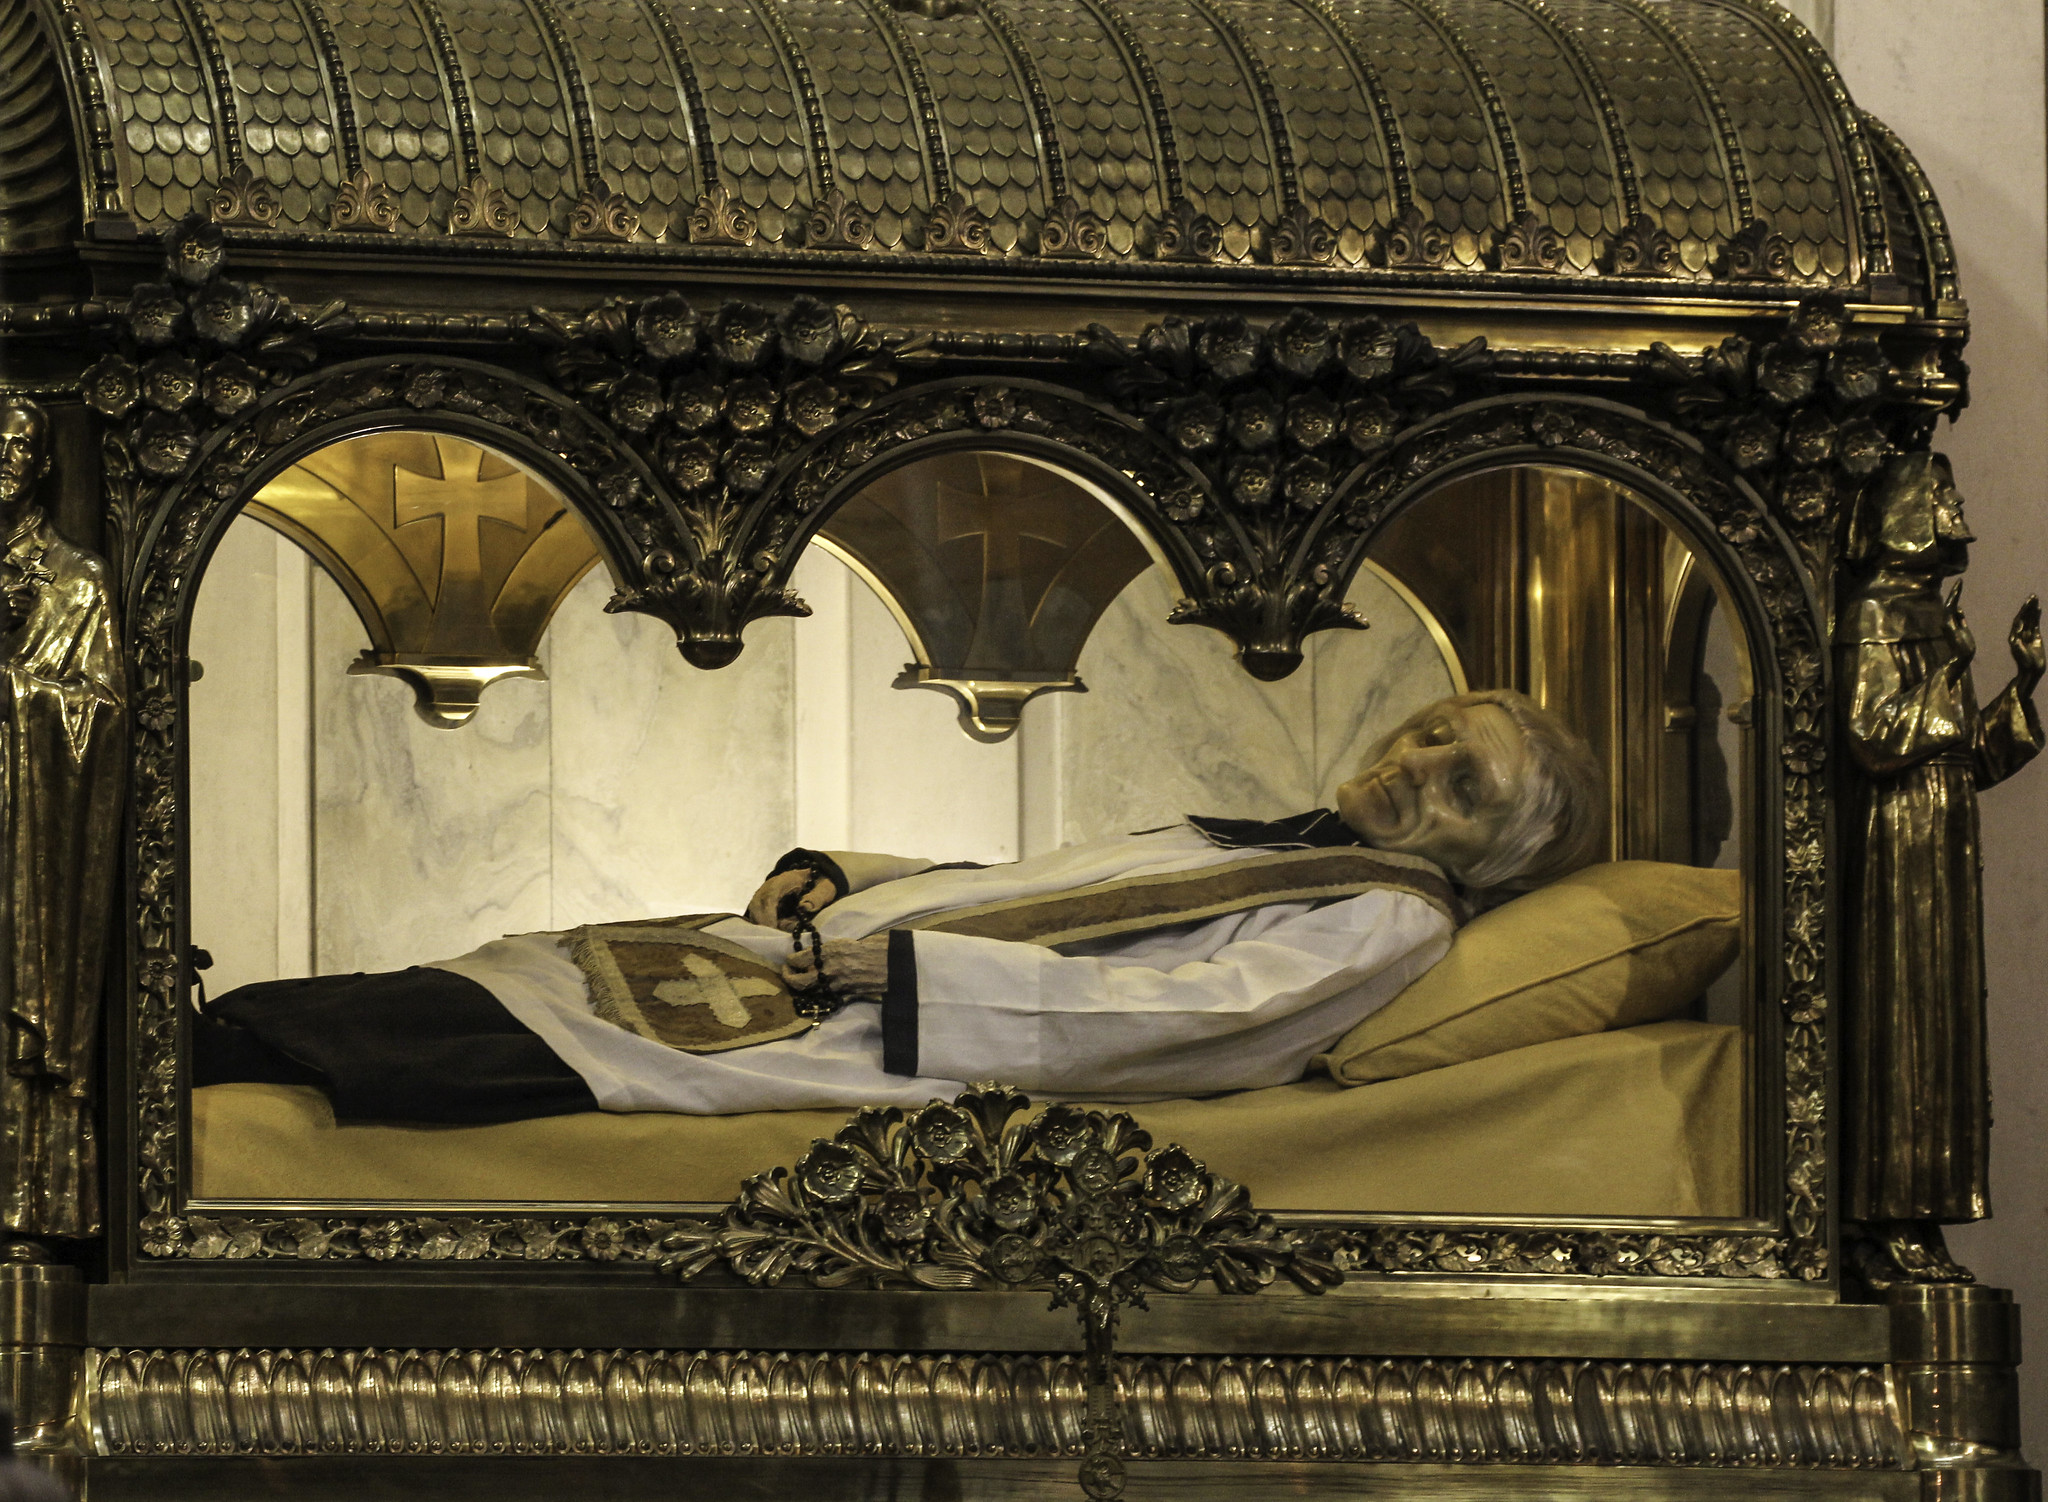 preserved body of saints